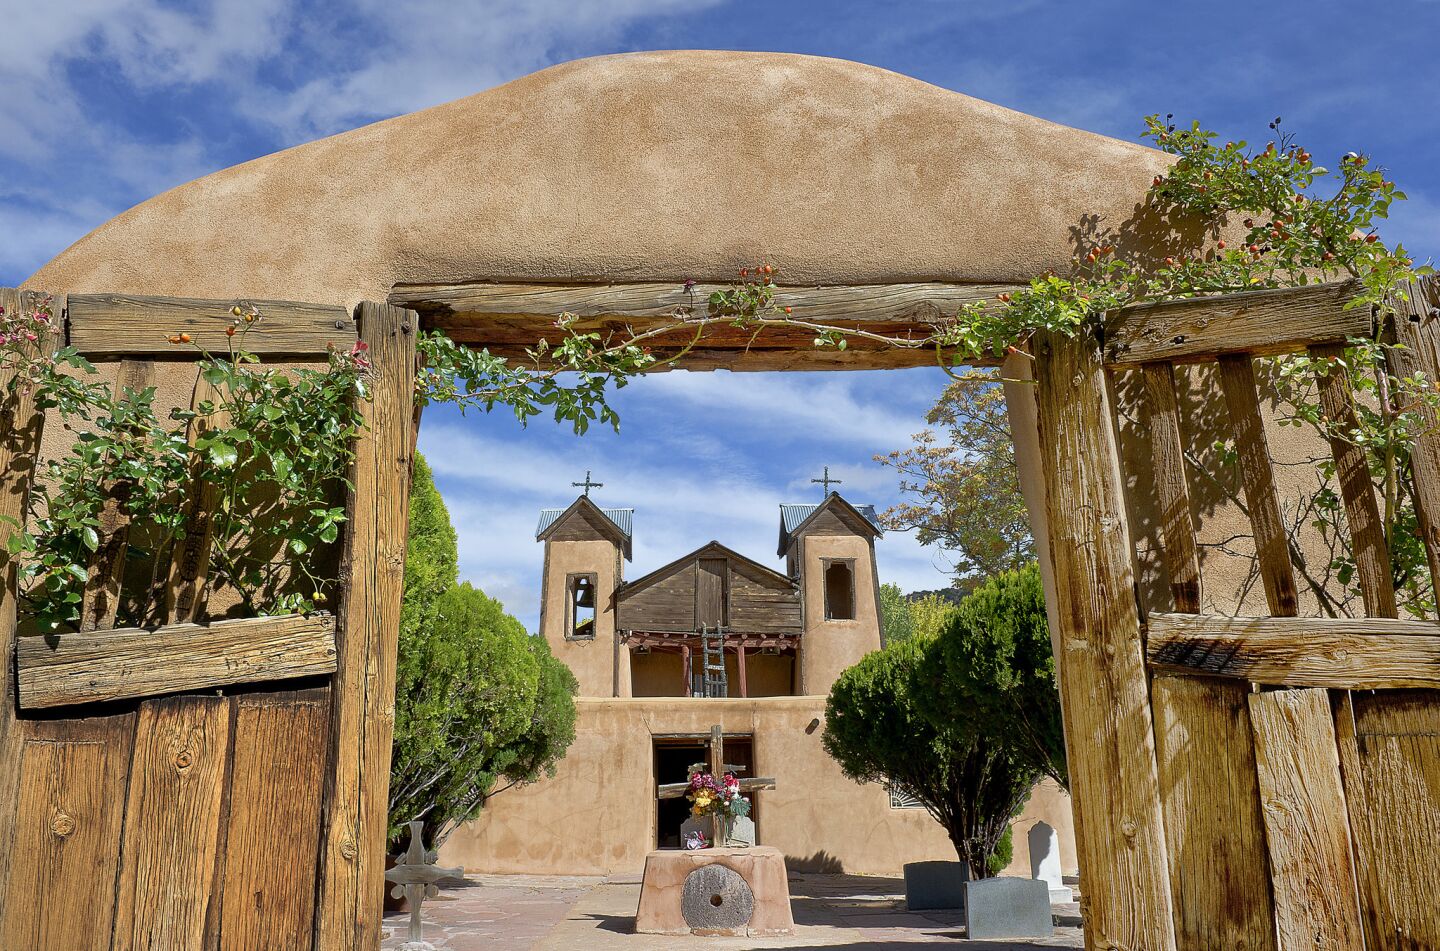 The Santuario de Chimayo in New Mexico draws many religious pilgrims.